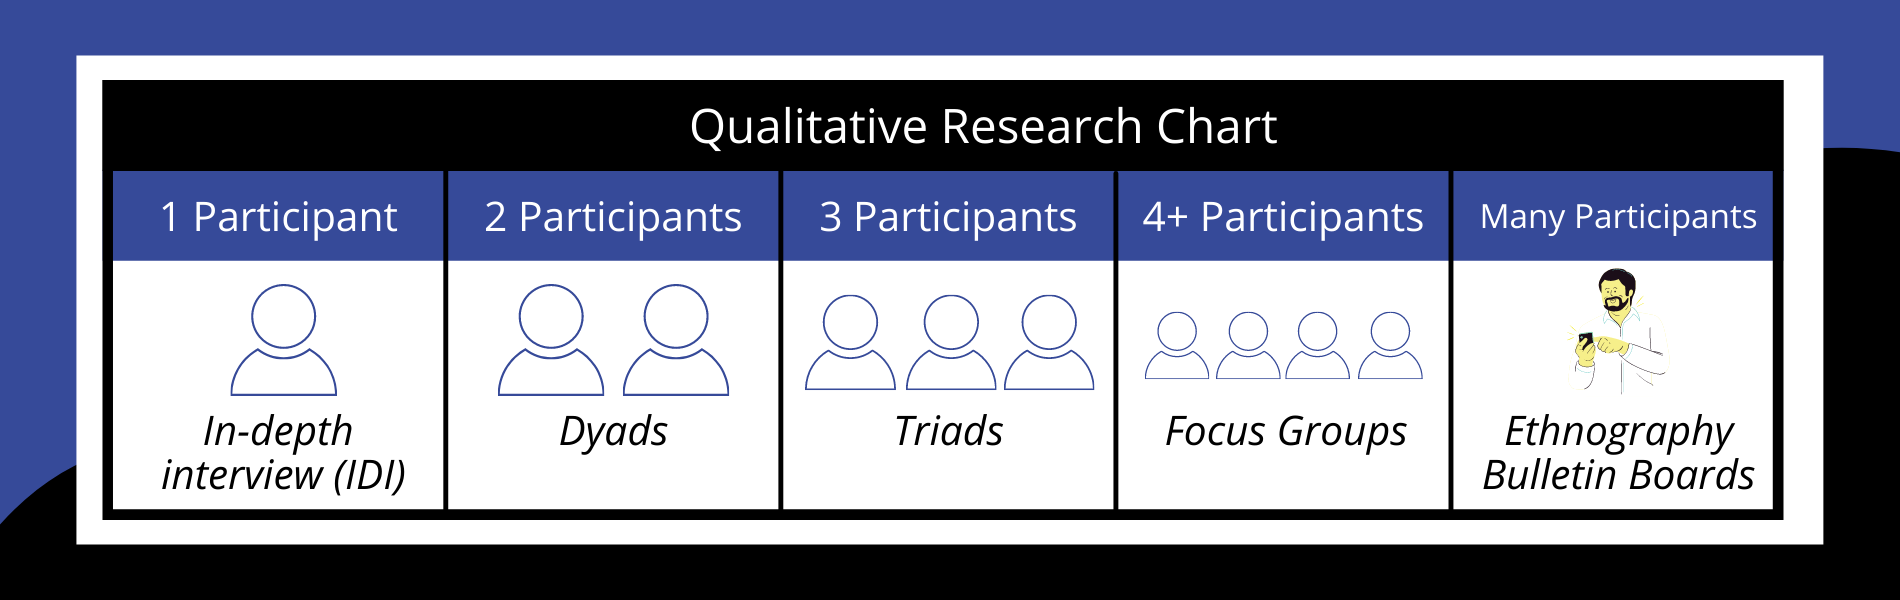 Qualitative Research Chart - Drive Research